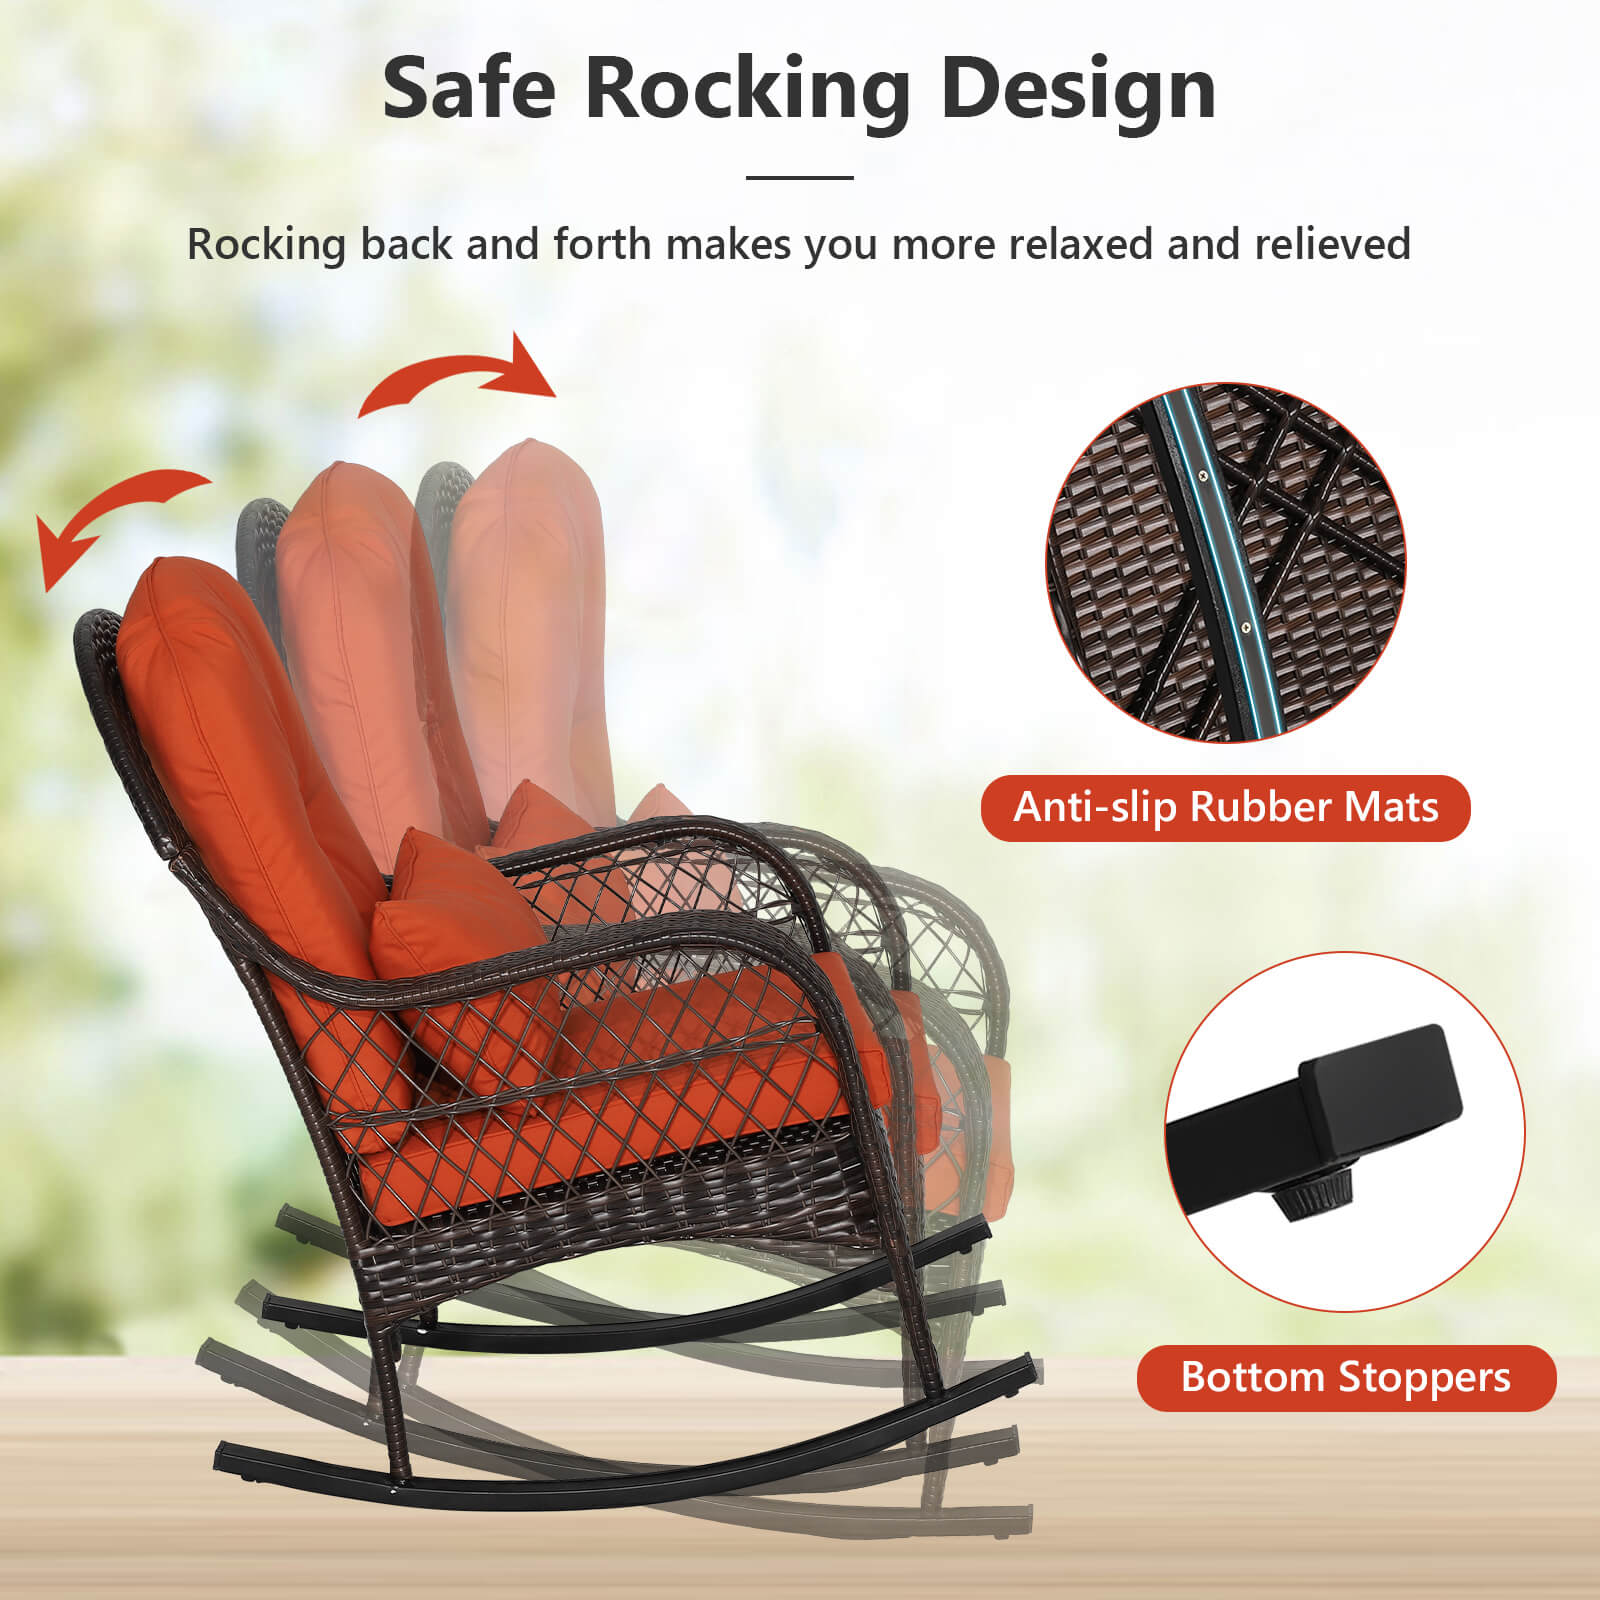 Patio_Rocking_Chair_with_Safe_Rocking_Design-3.jpg